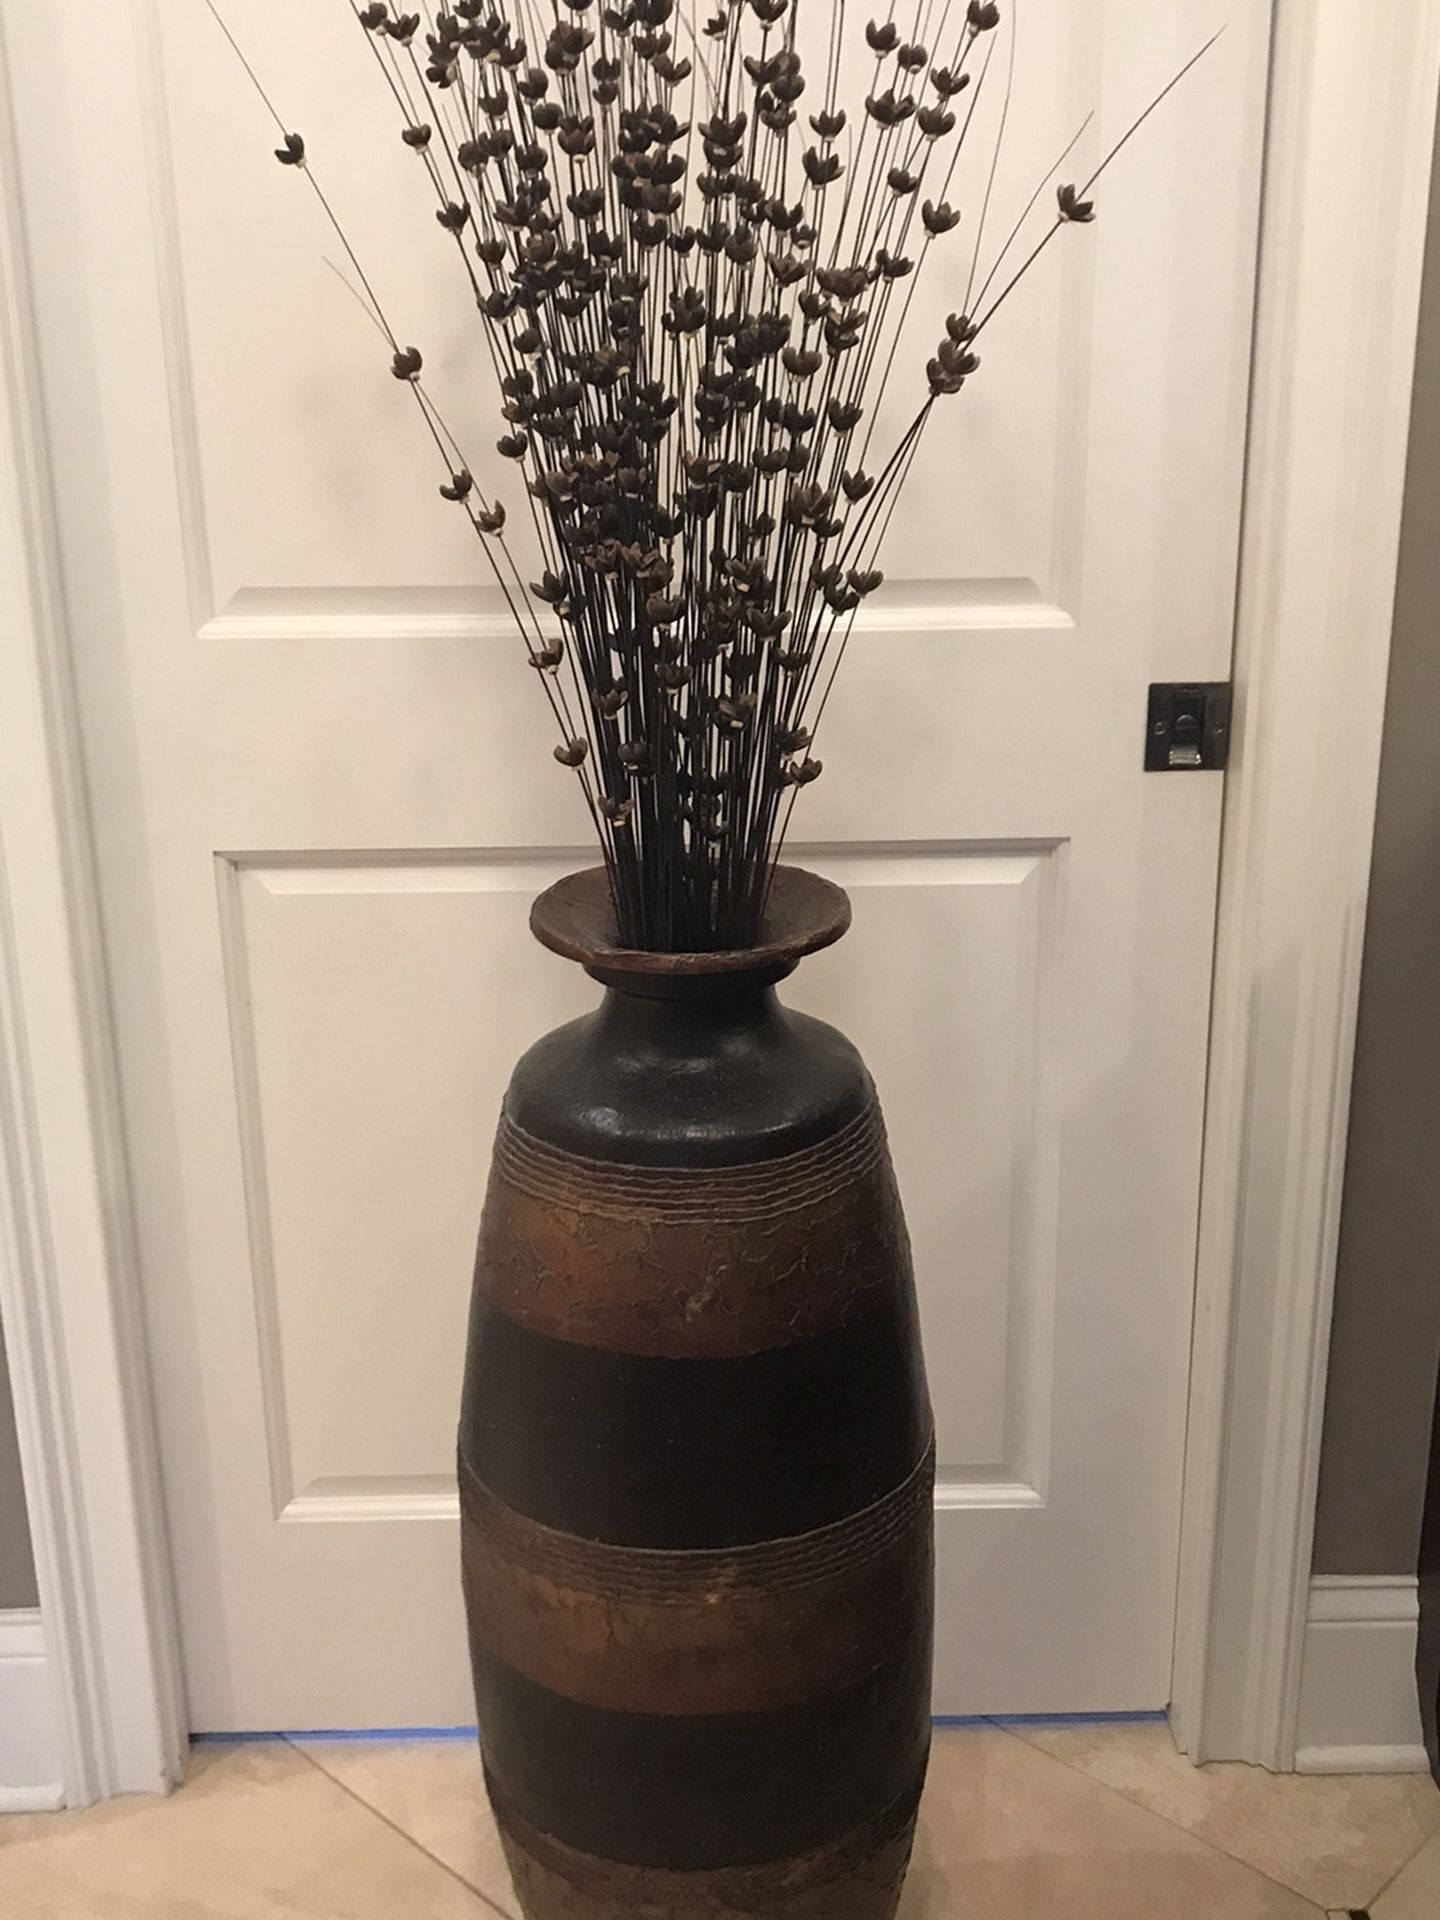 3 Ft. Tall Vase With Flower Sticks